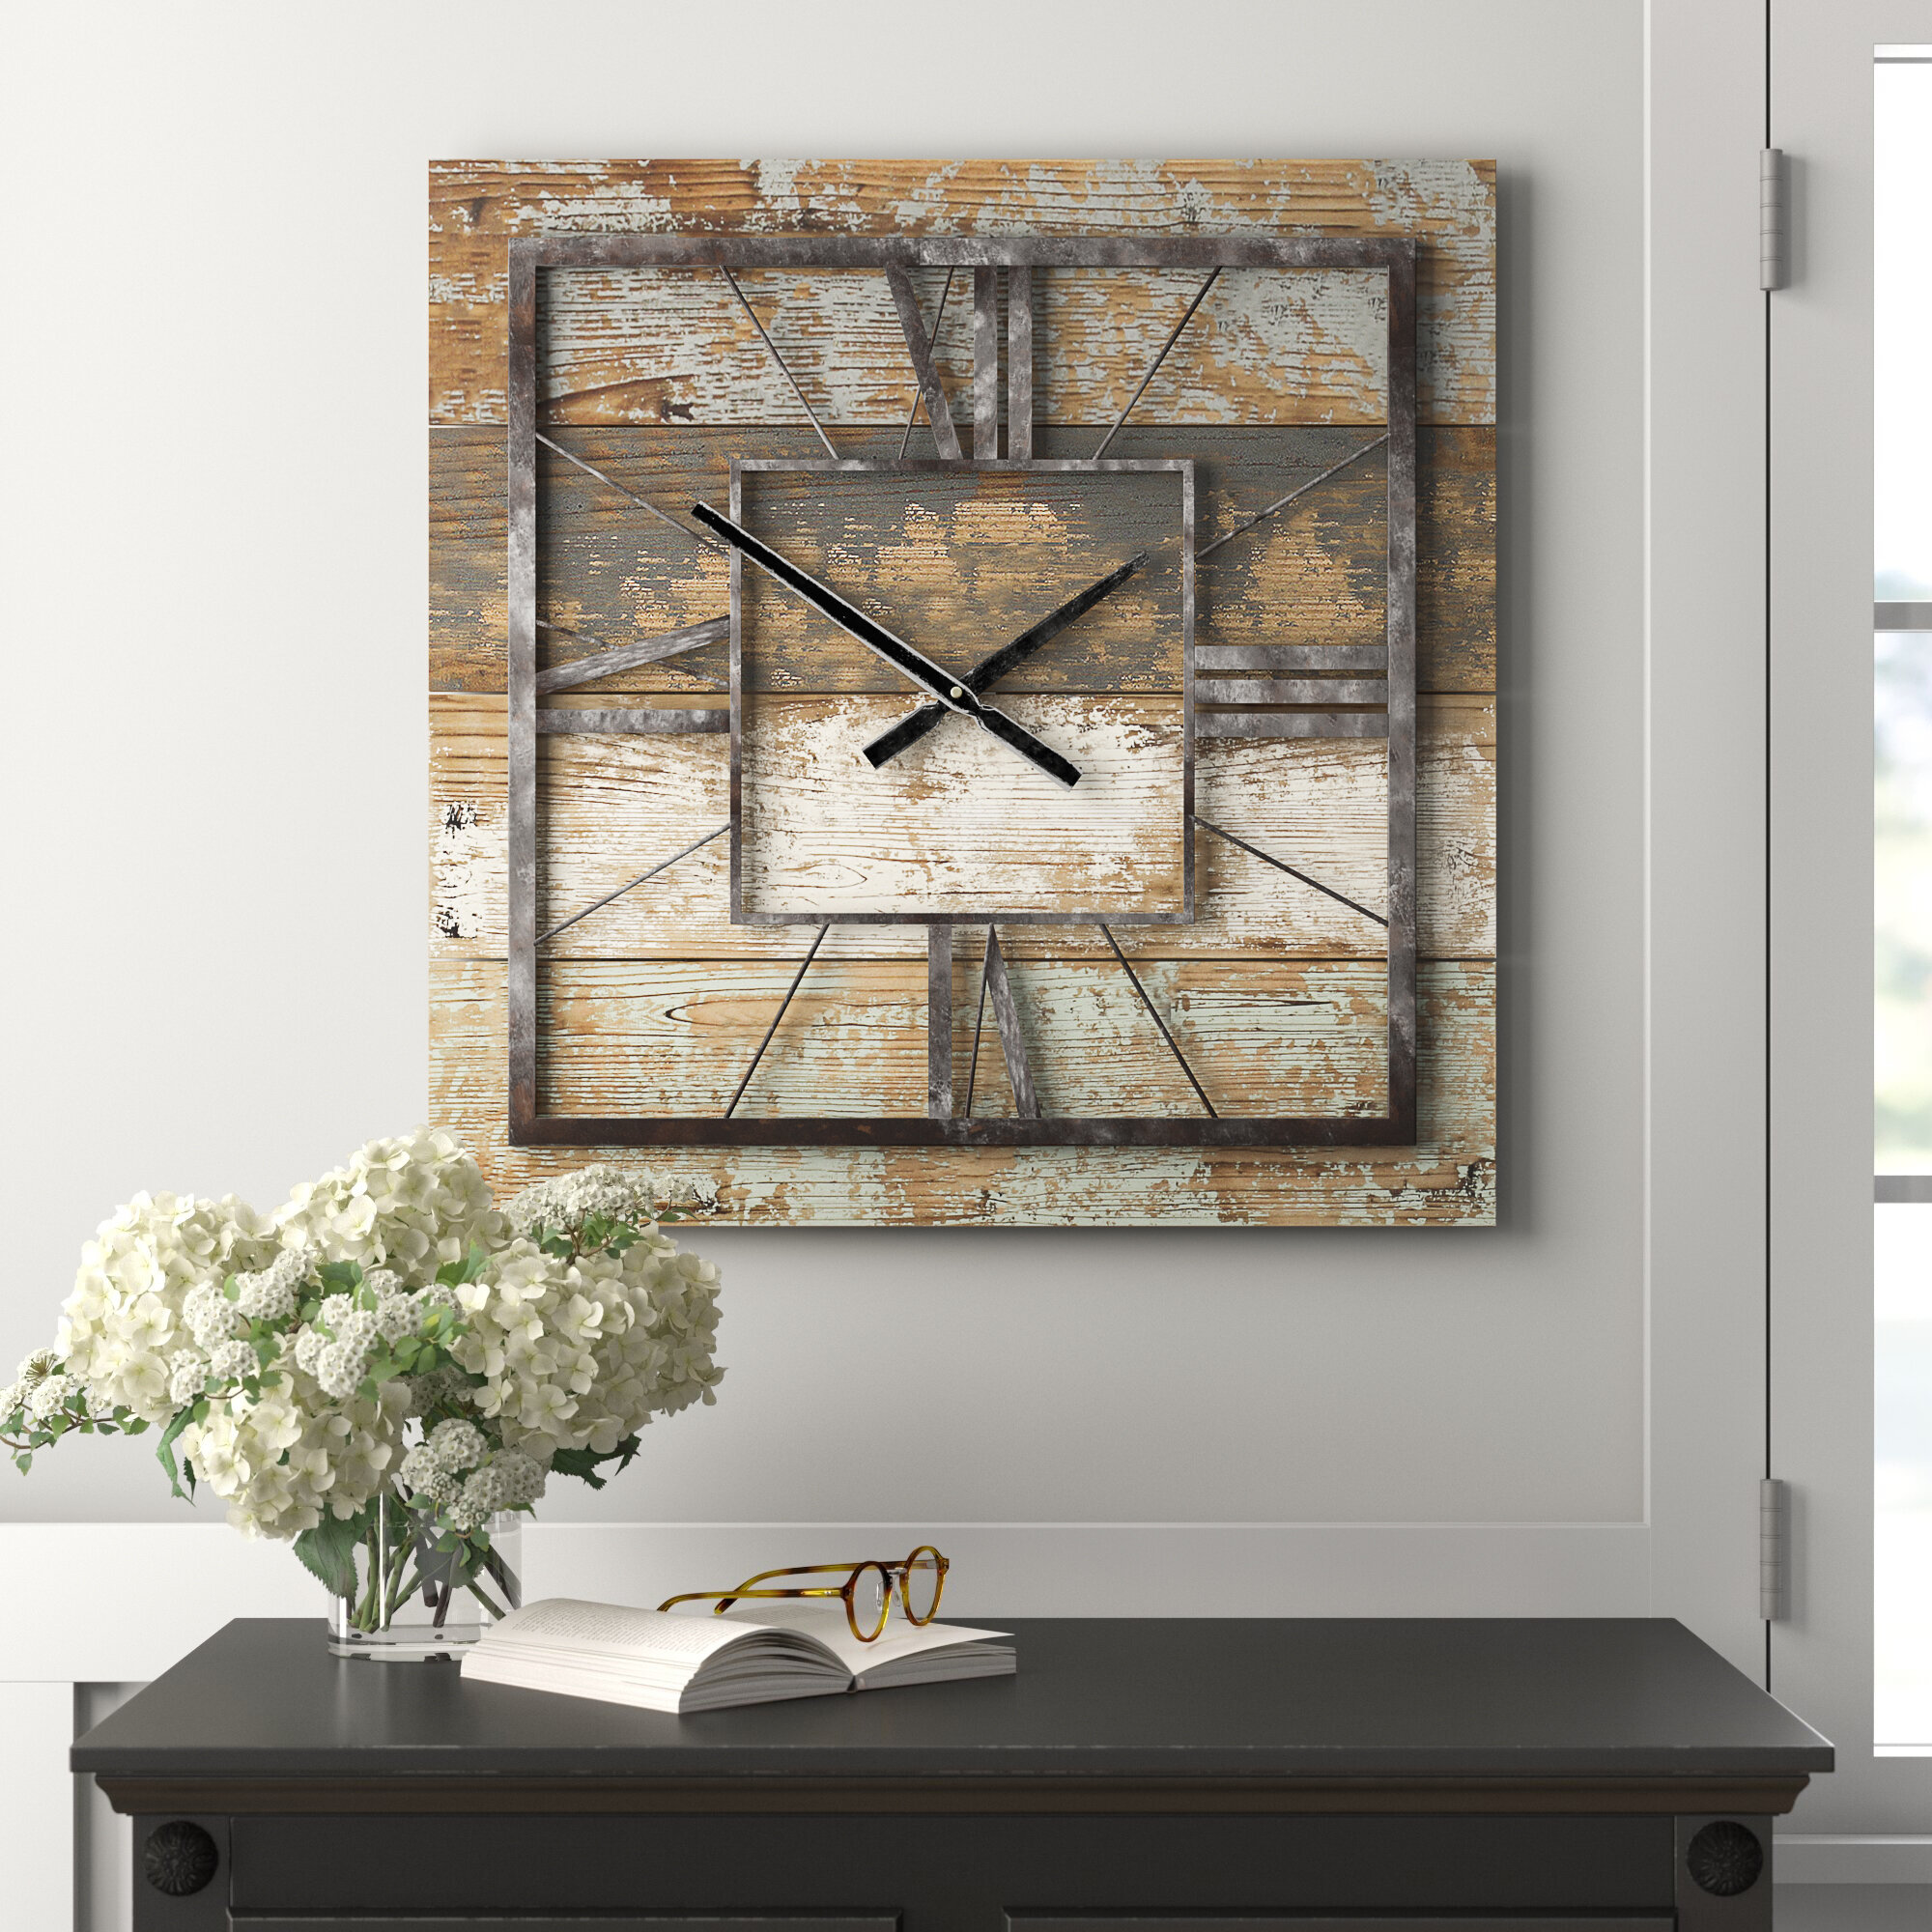 Home, Furniture & DIY Large Wall Clock Big Vintage Rustic Antique